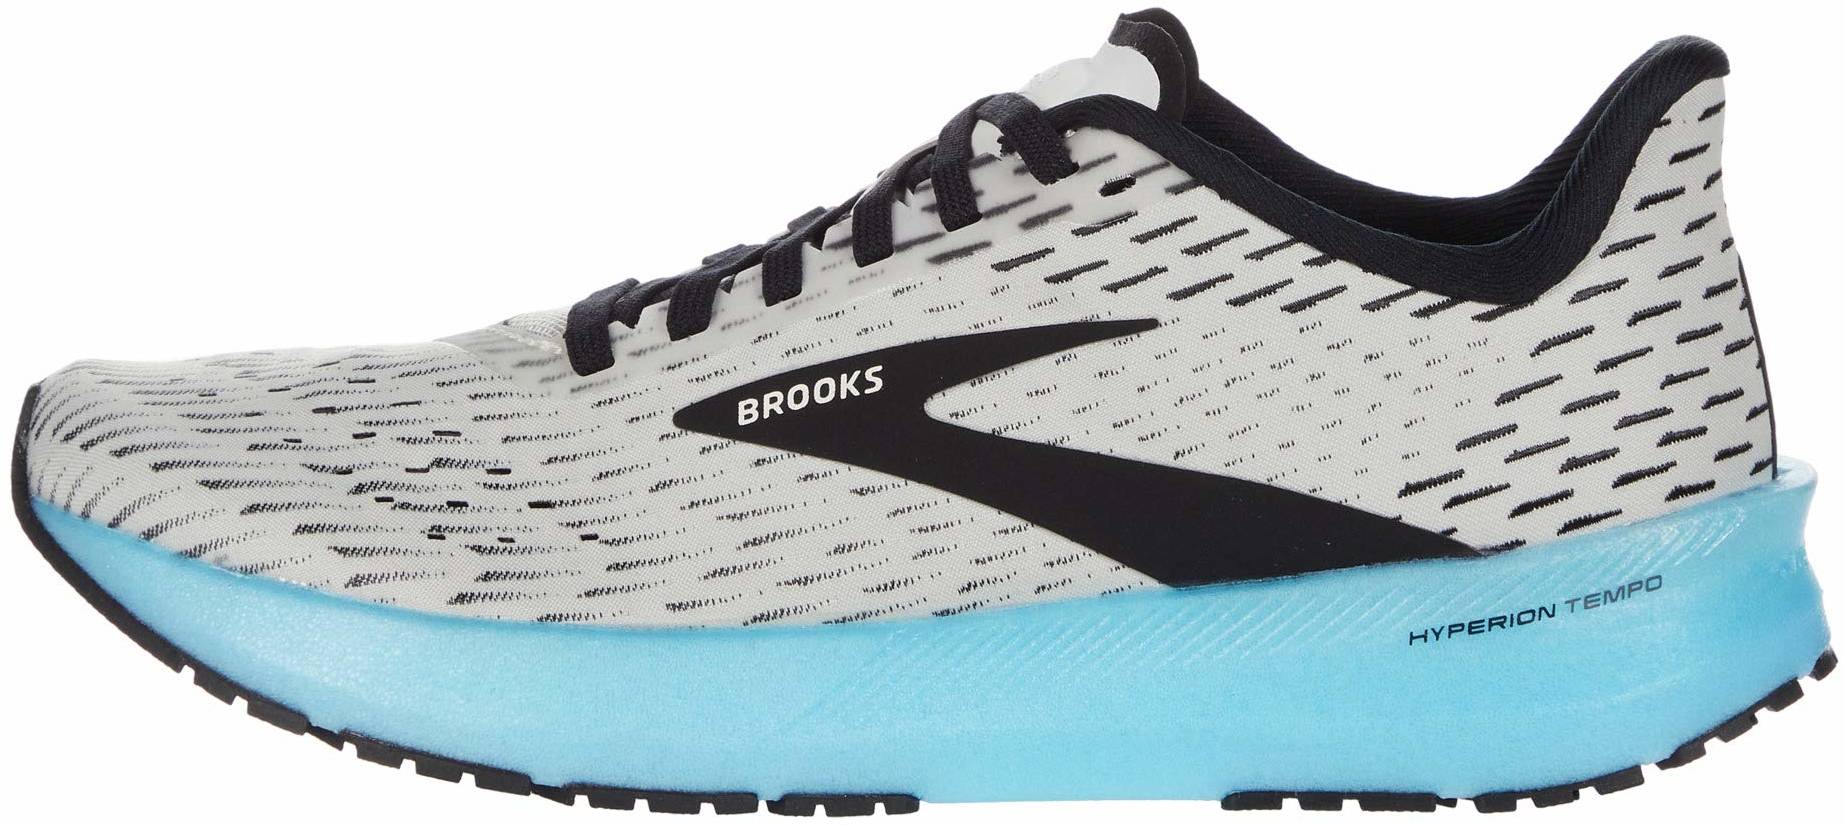 brooks light stability running shoe